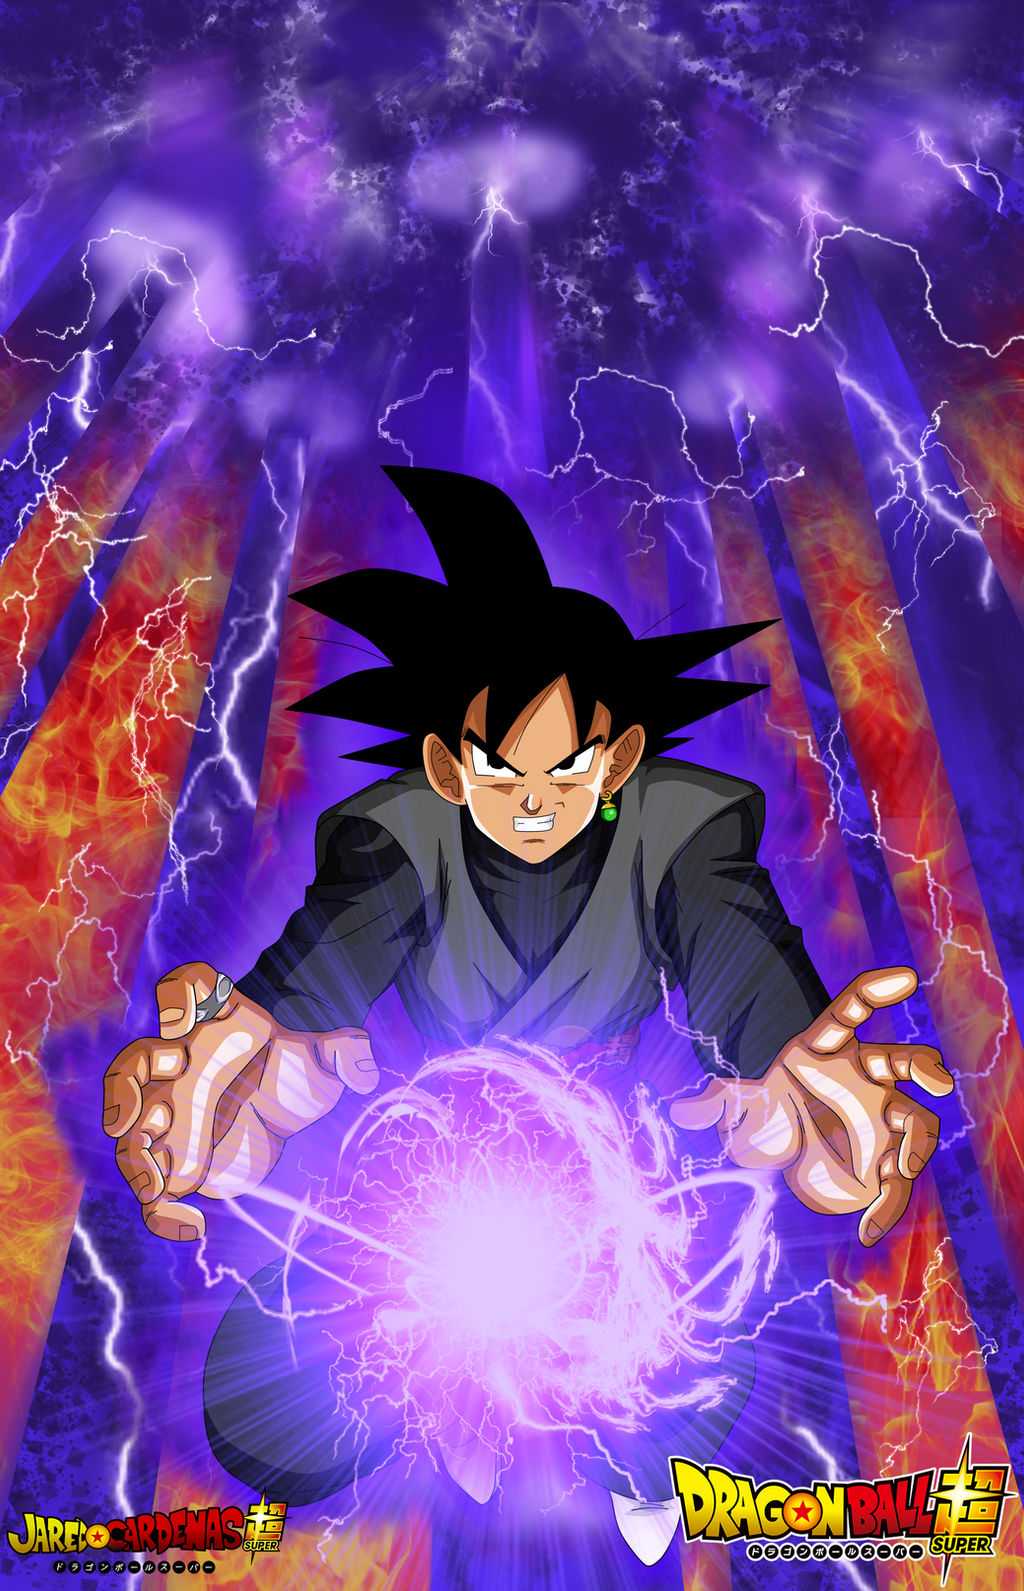 Poster Goku Black Power by jaredsongohan on DeviantArt